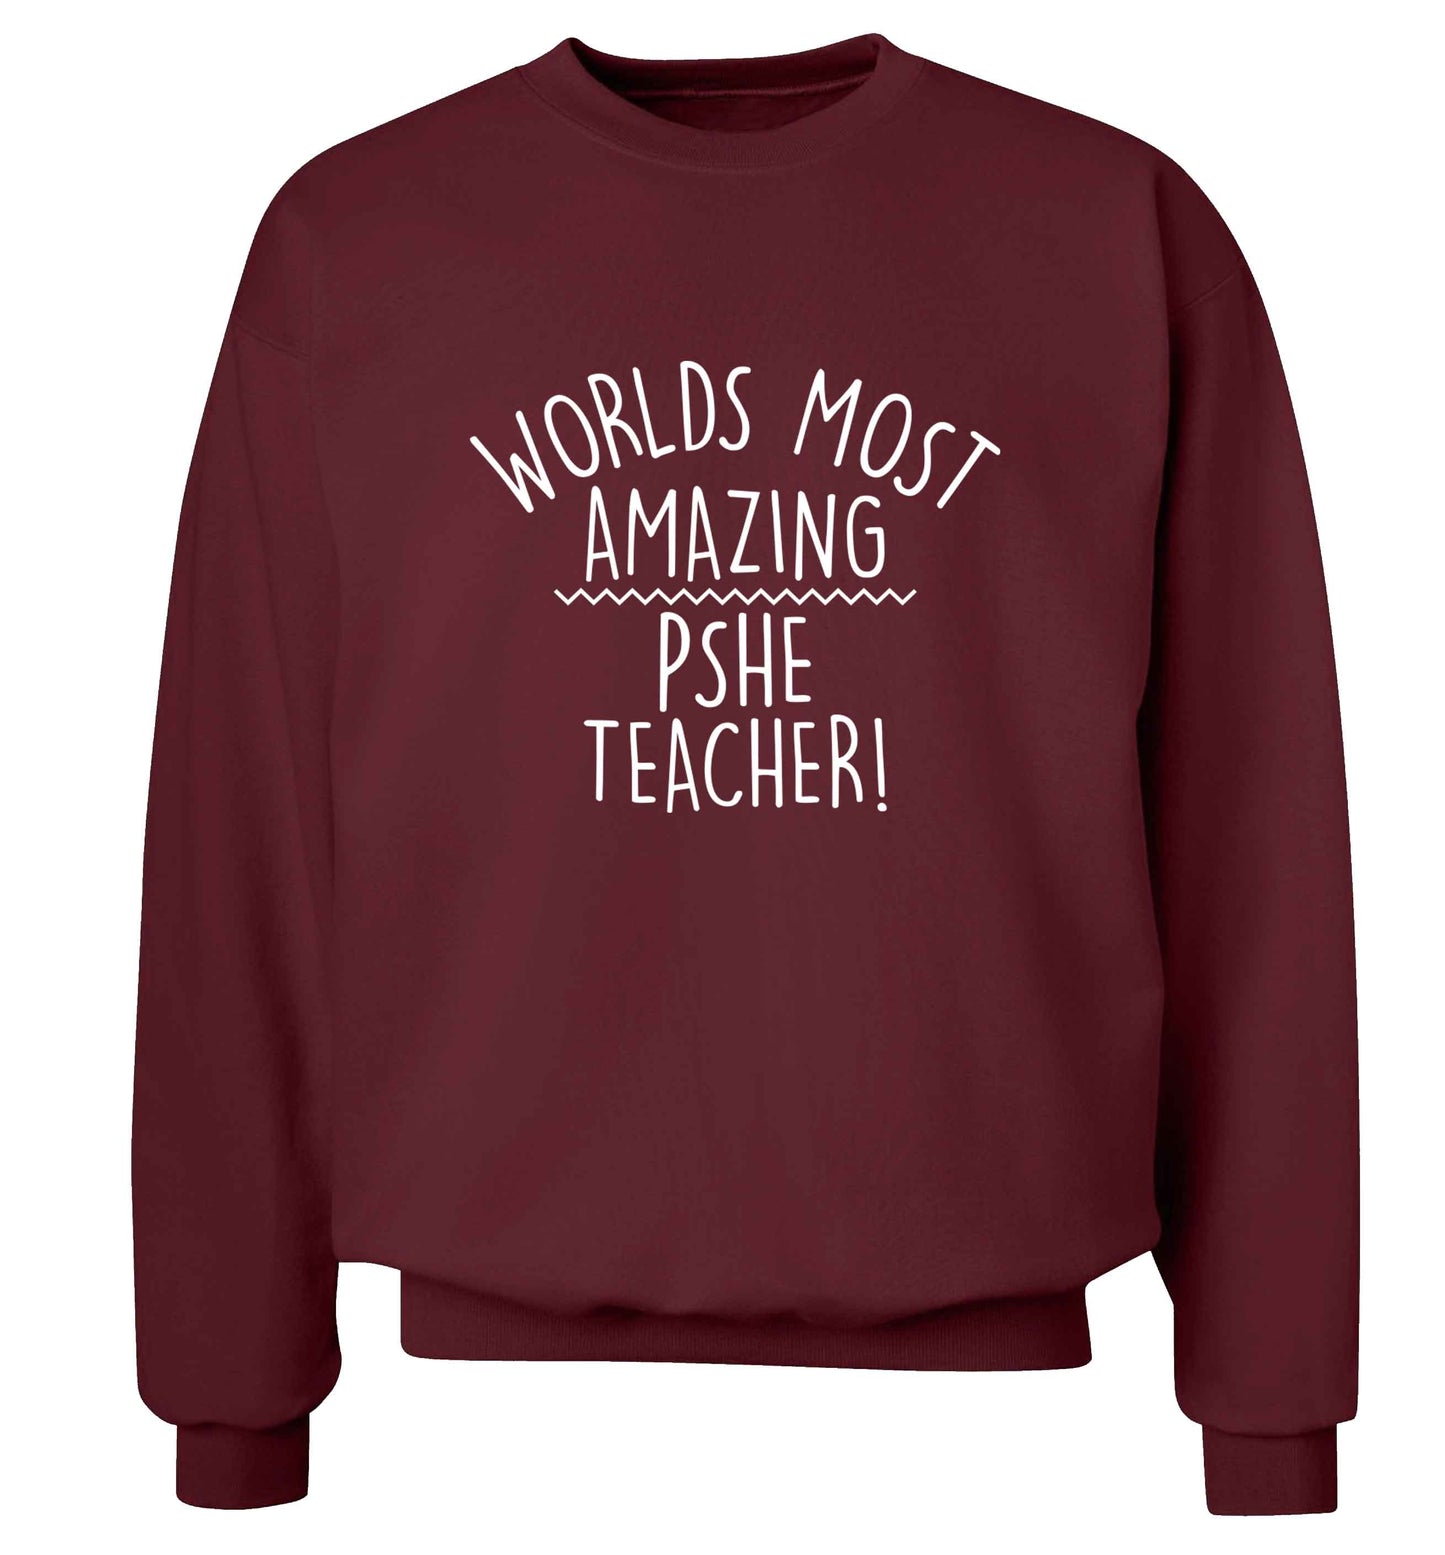 Worlds most amazing PHSE teacher adult's unisex maroon sweater 2XL